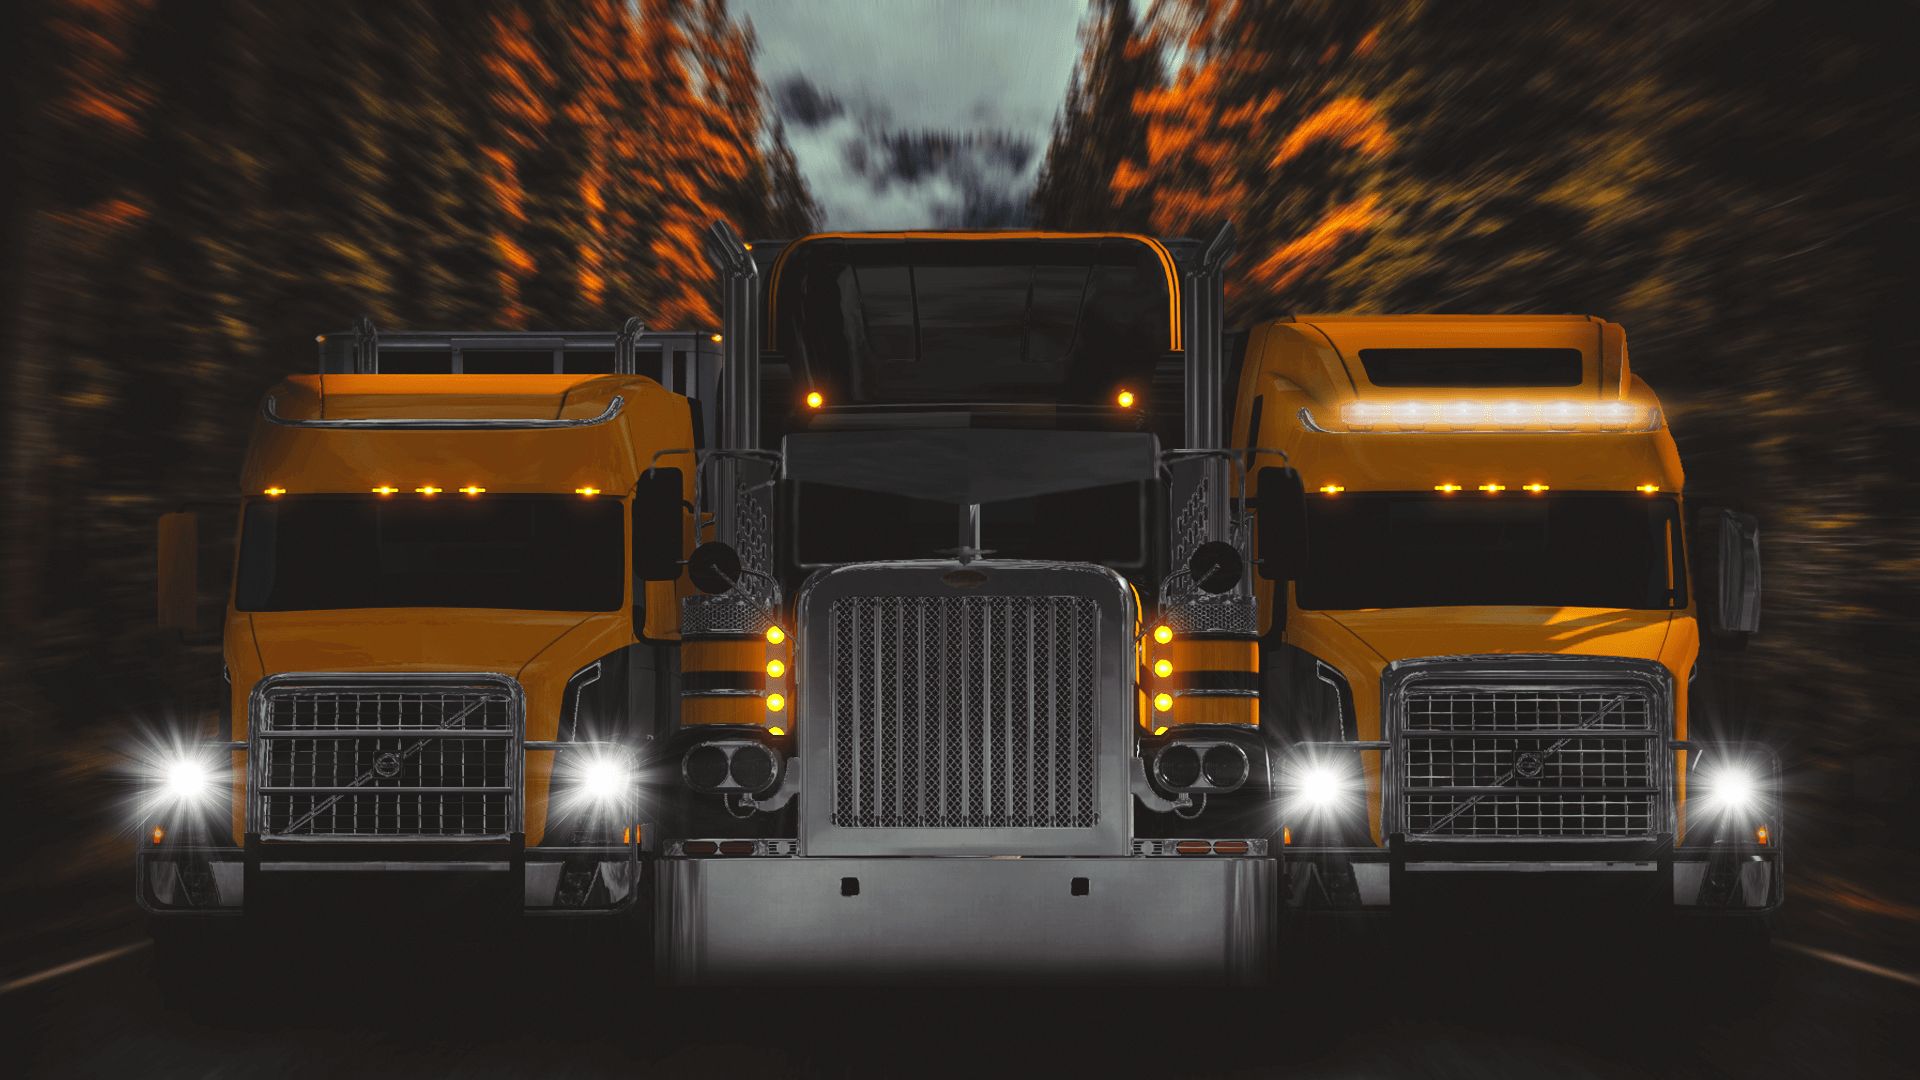 euro truck simulator 2 mod folder steam